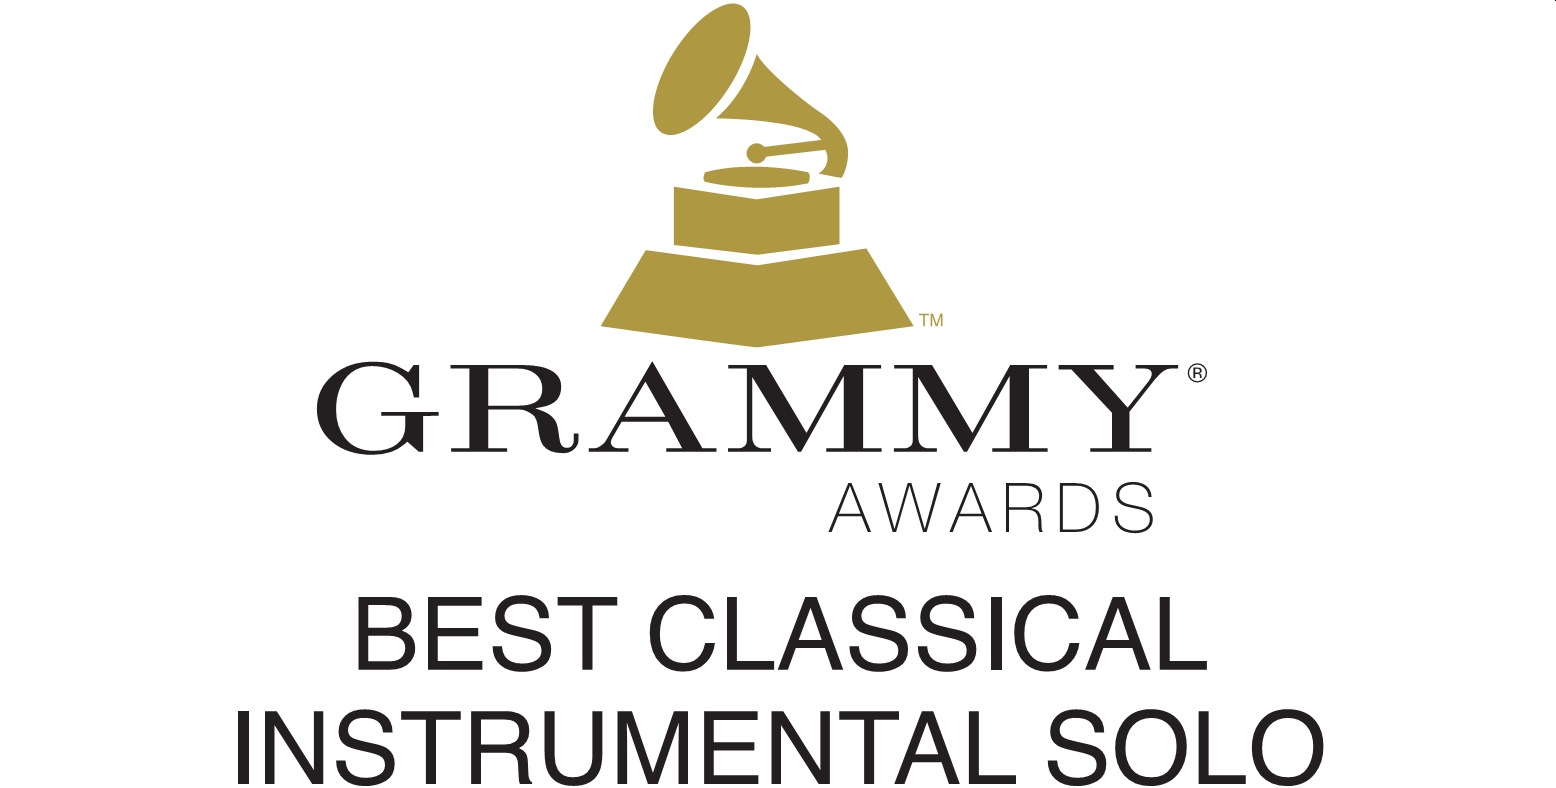 Grammy Award: 'Best Classical Instrumental Solo' (2012)